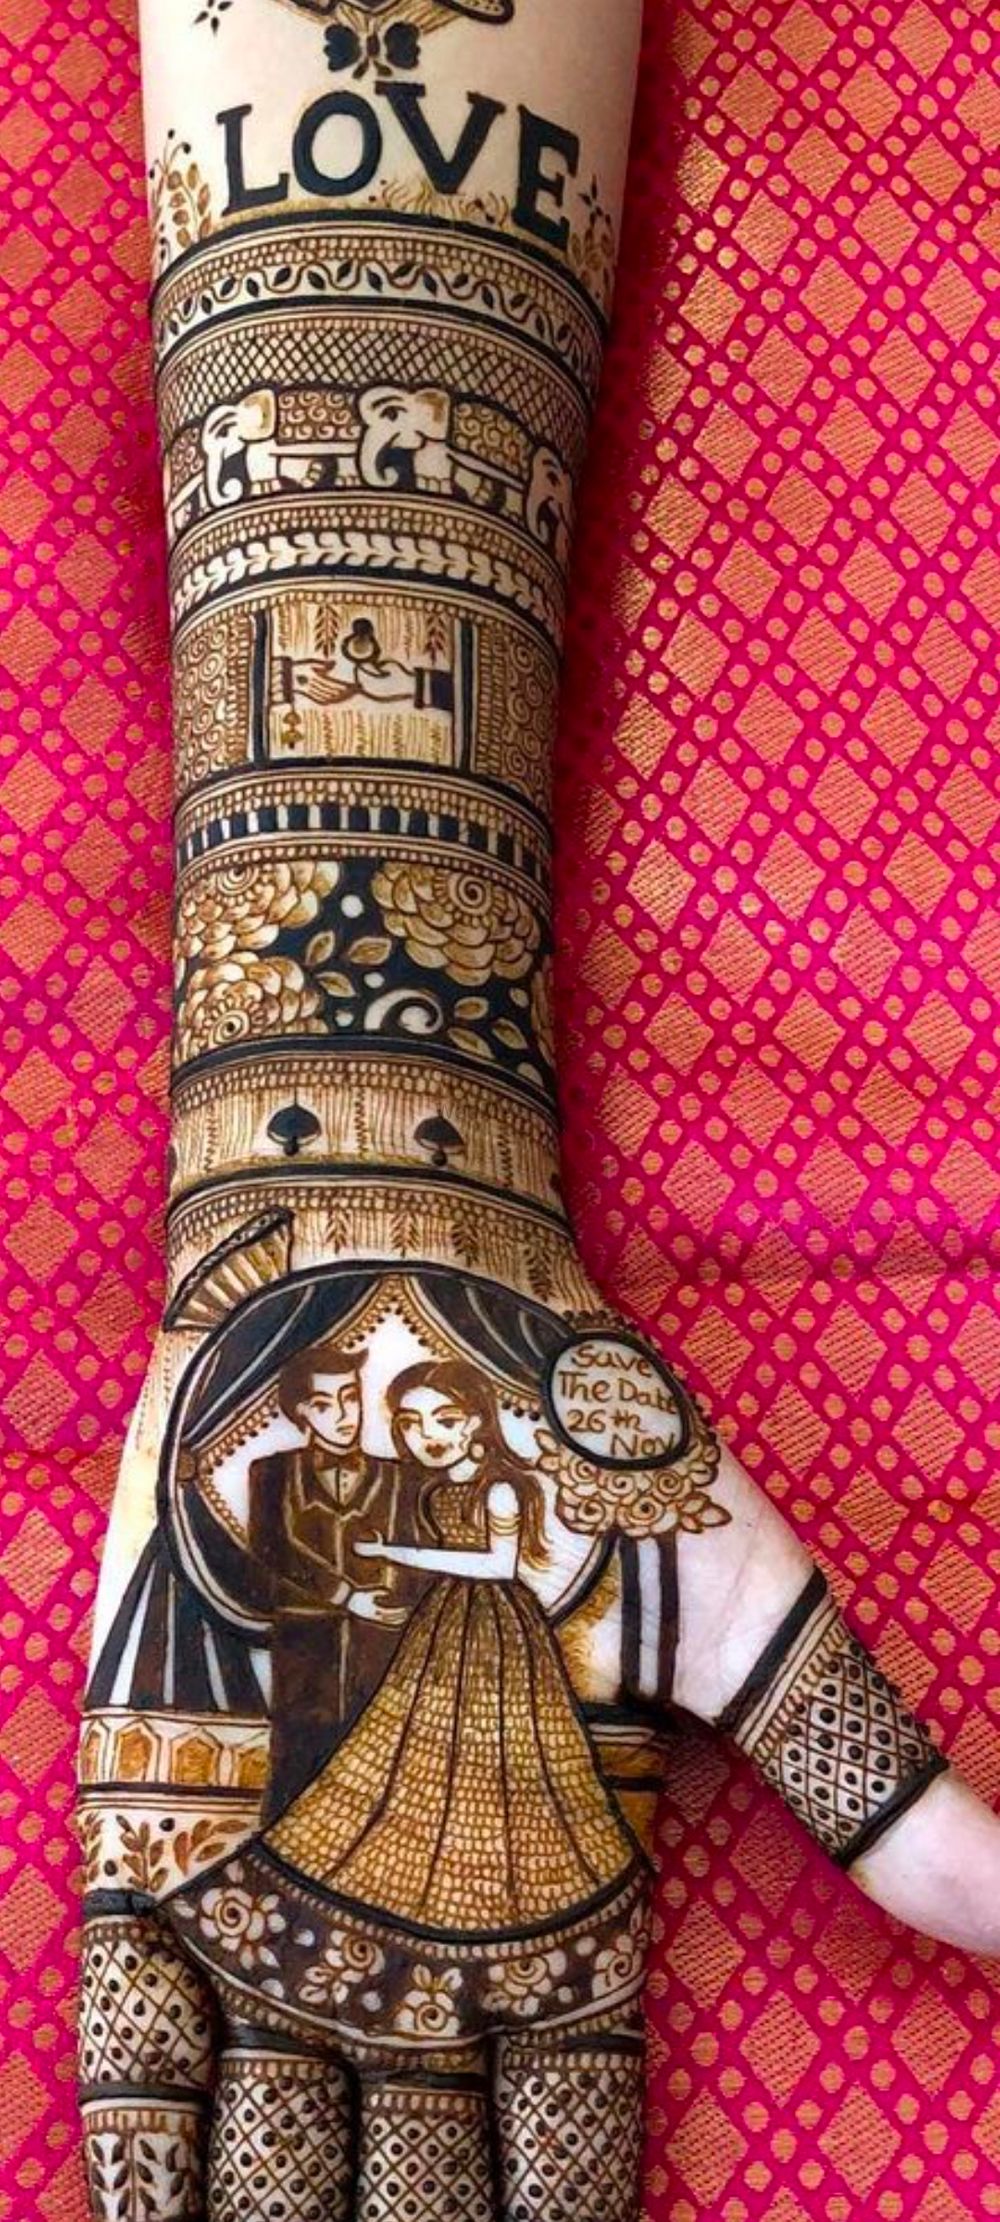 Photo From Bridal Mehendi - By Krishna Mehandi Art